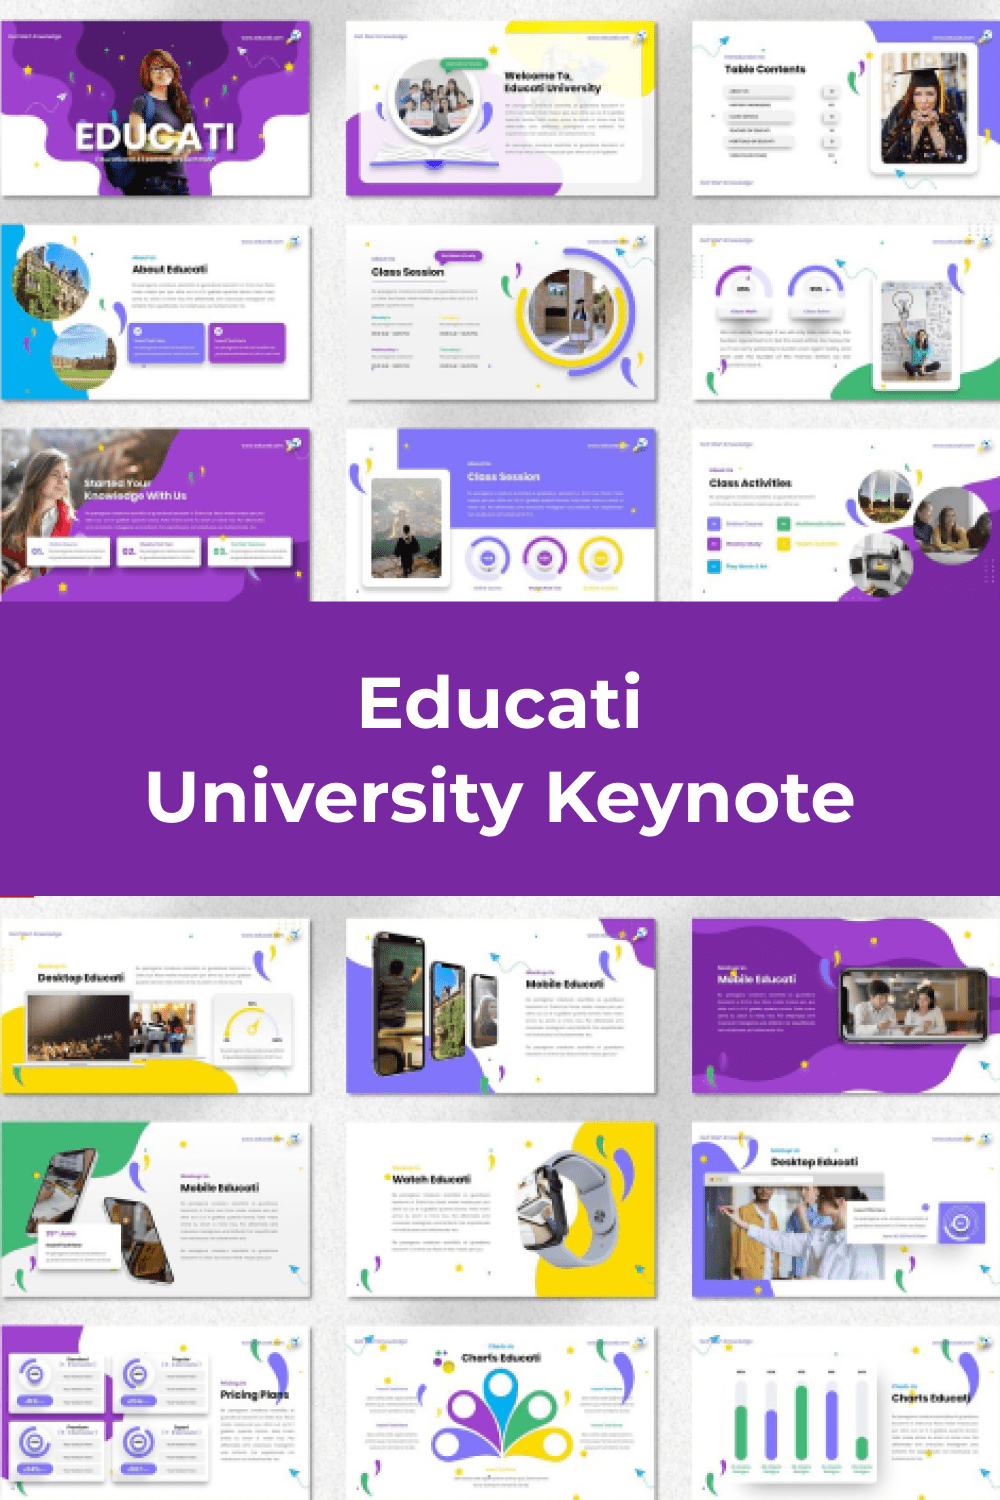 Educati - University Keynote Pinterest.